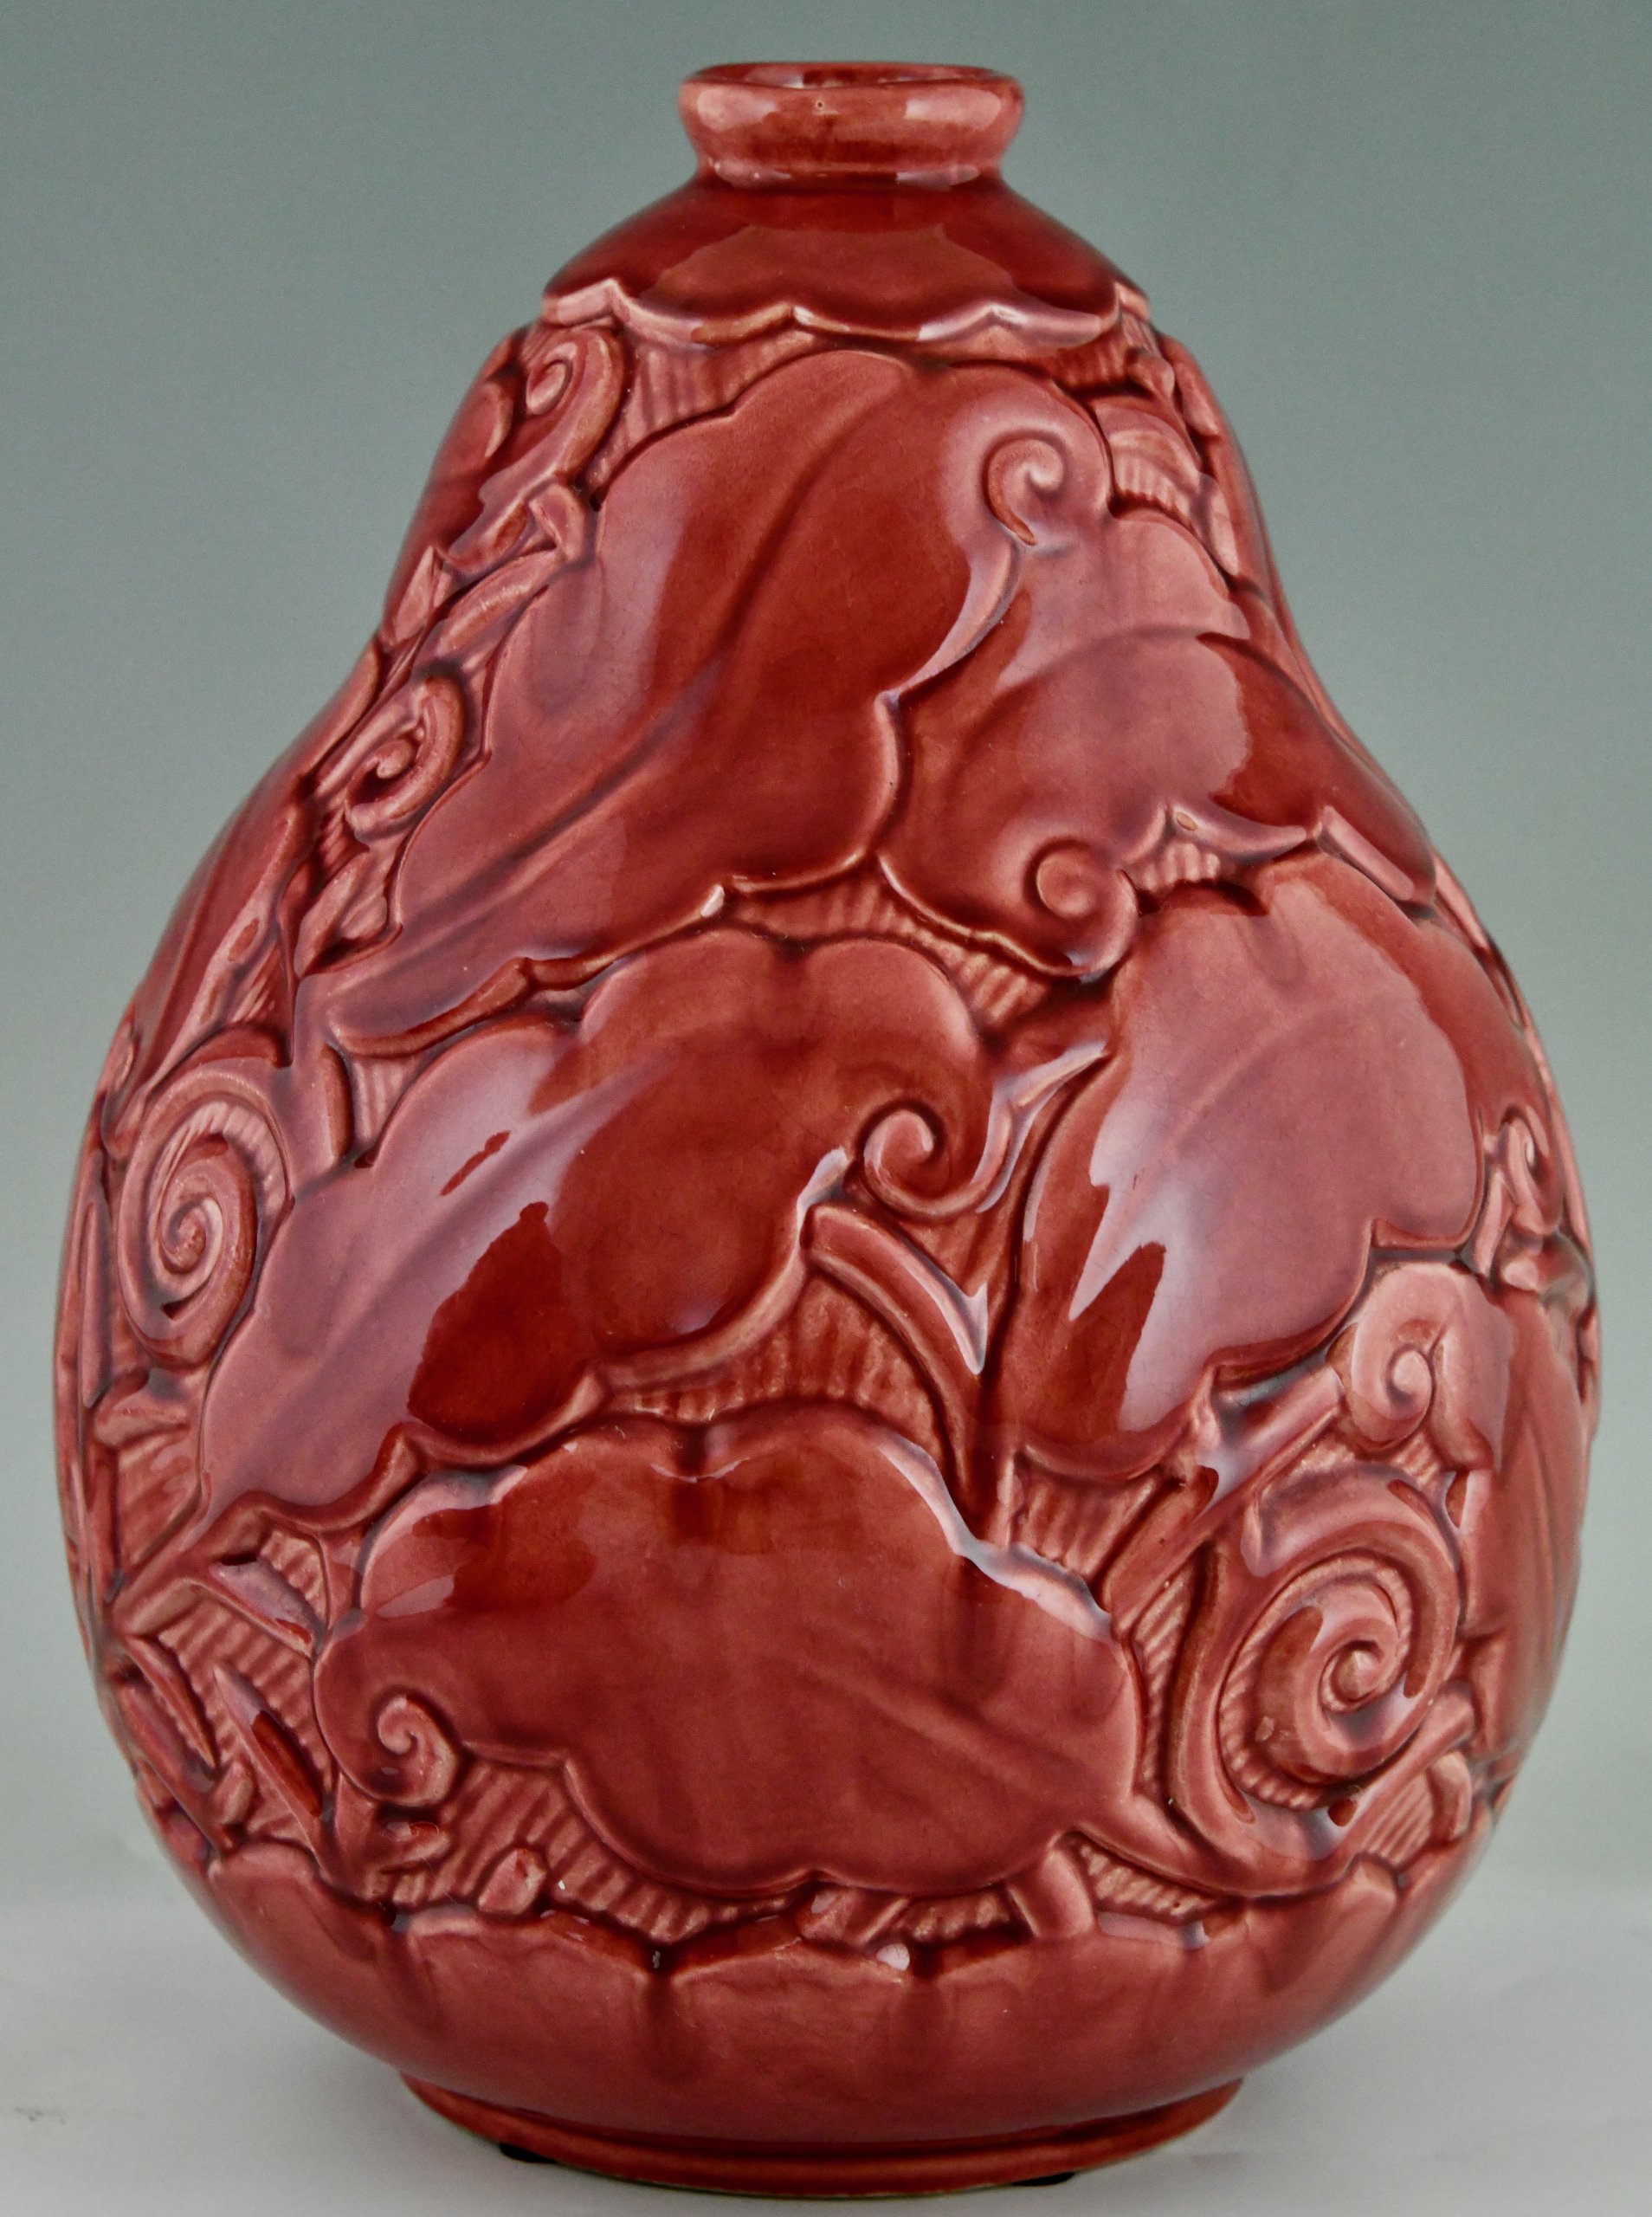 Art Deco red ceramic vases with leaves.